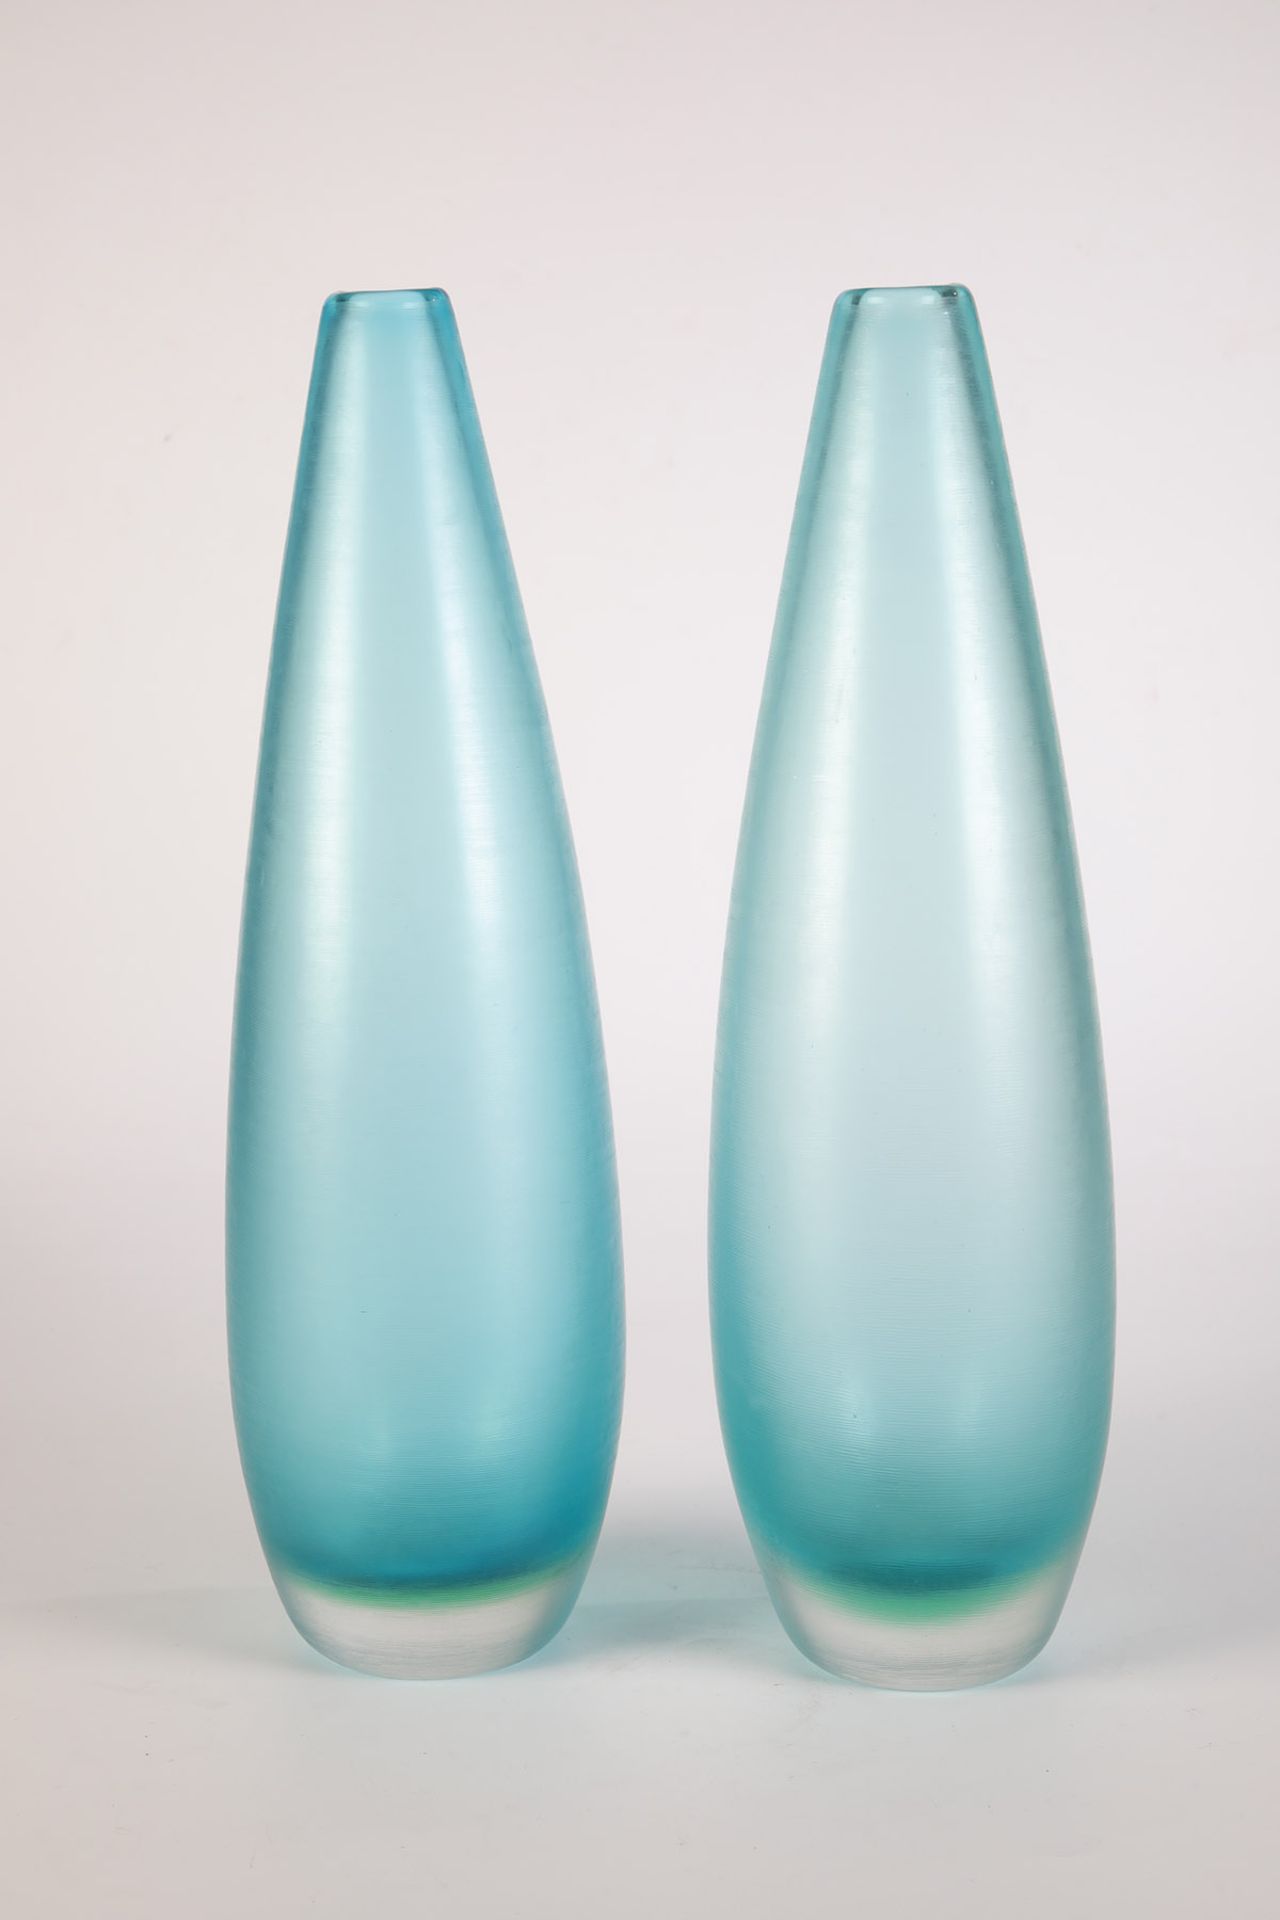 Paar Vasen ''Inciso''Paolo Venini (Entwurf), Murano, 1956/57 Farbloses Glas mit grünem und